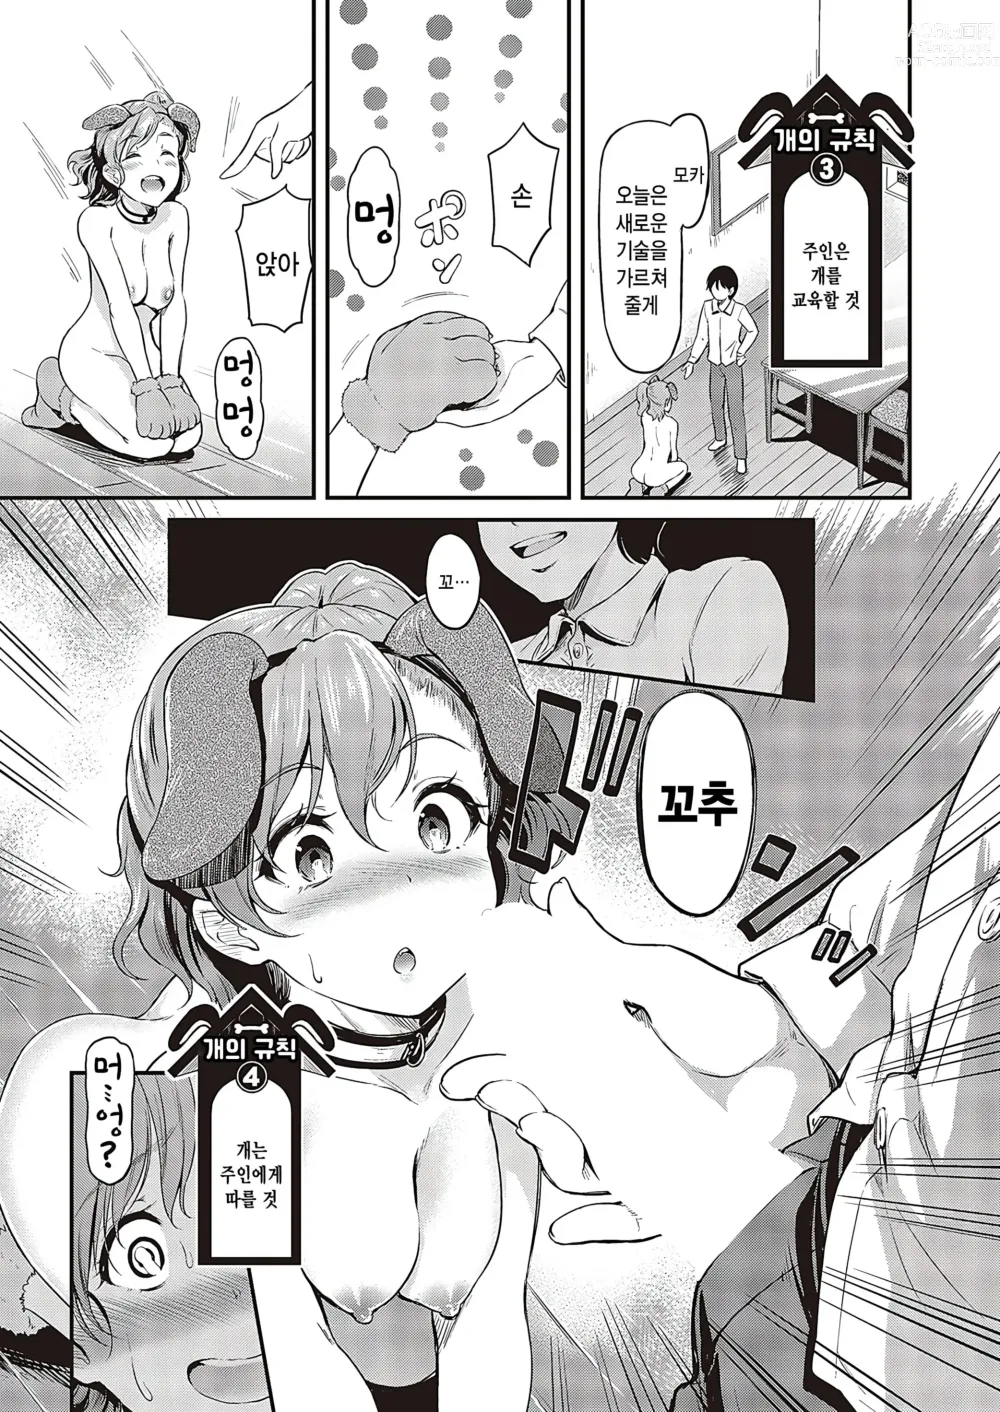 Page 5 of manga Katte Kudasai!